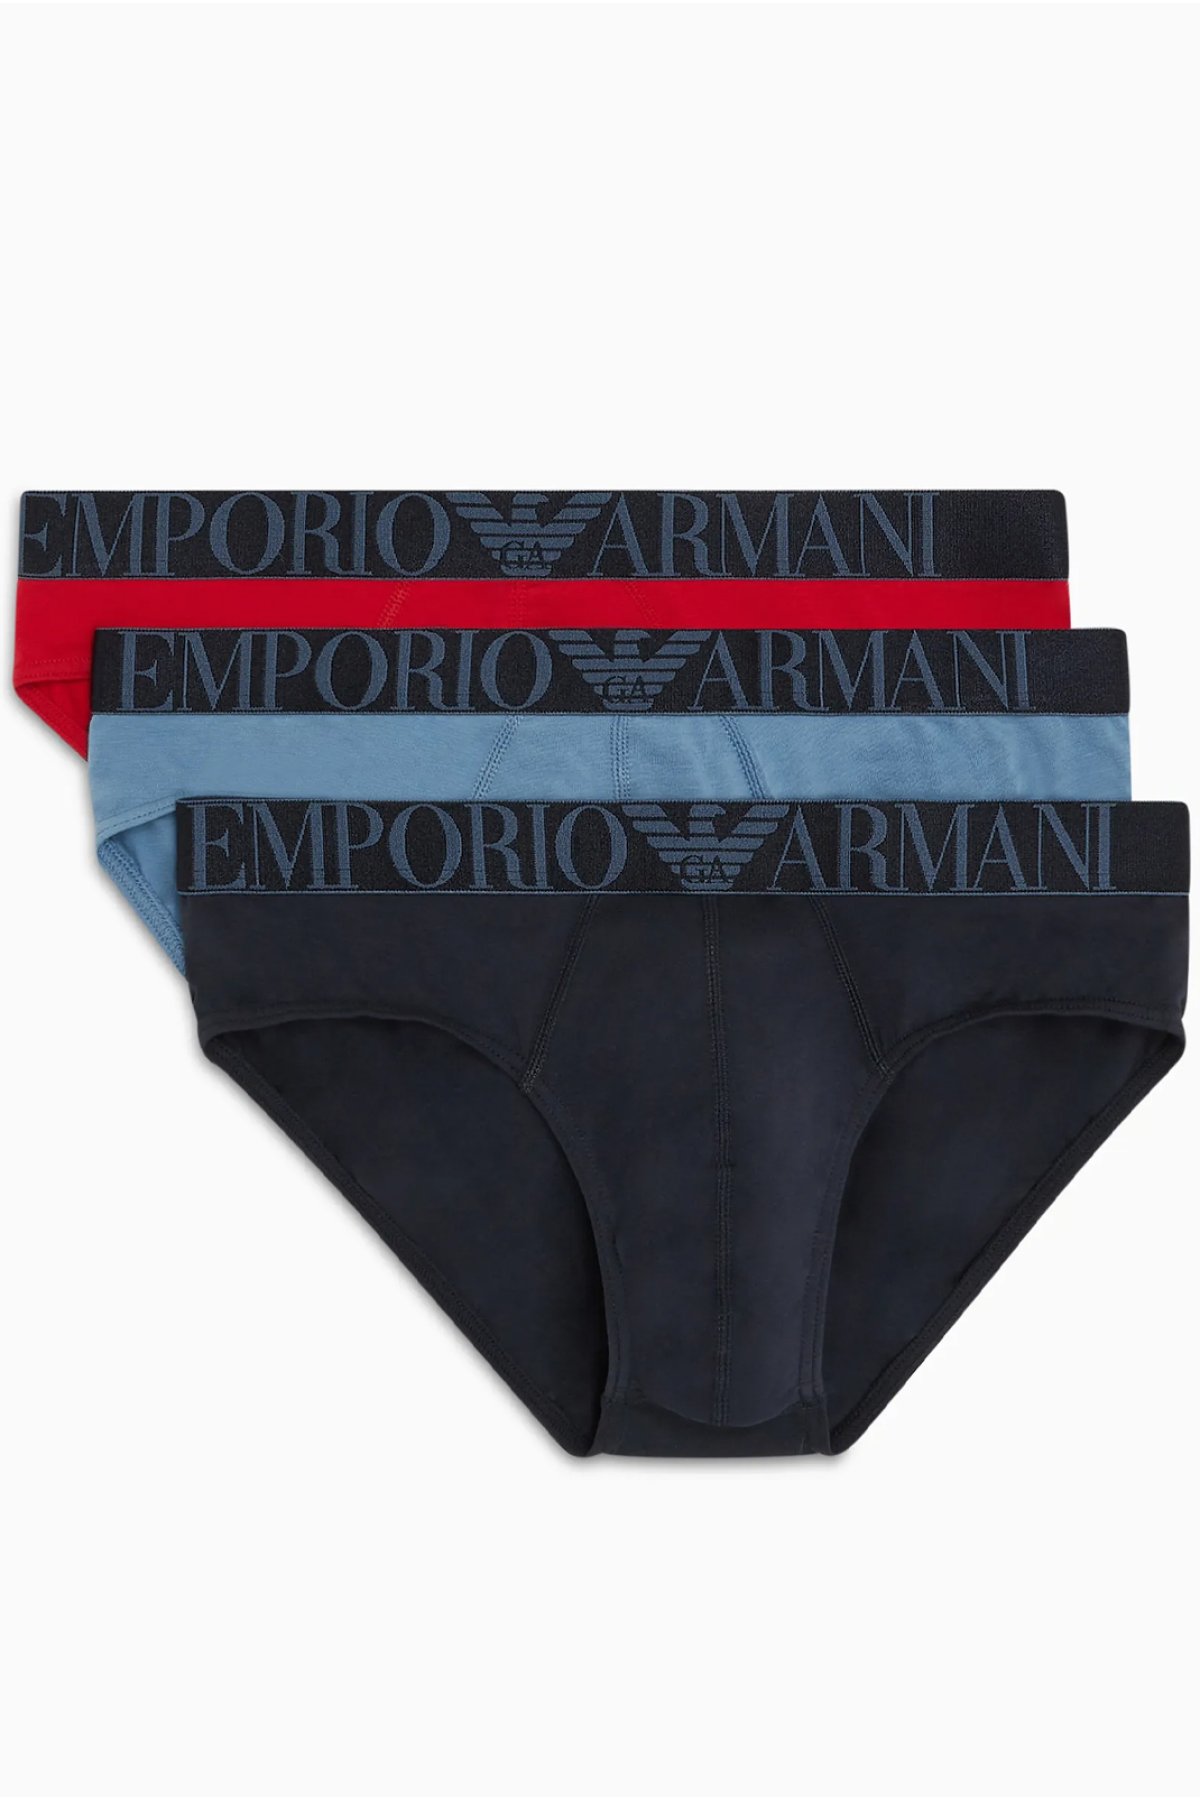 Emporio Armani 111734 4R726 Slip 3 Pack barevné